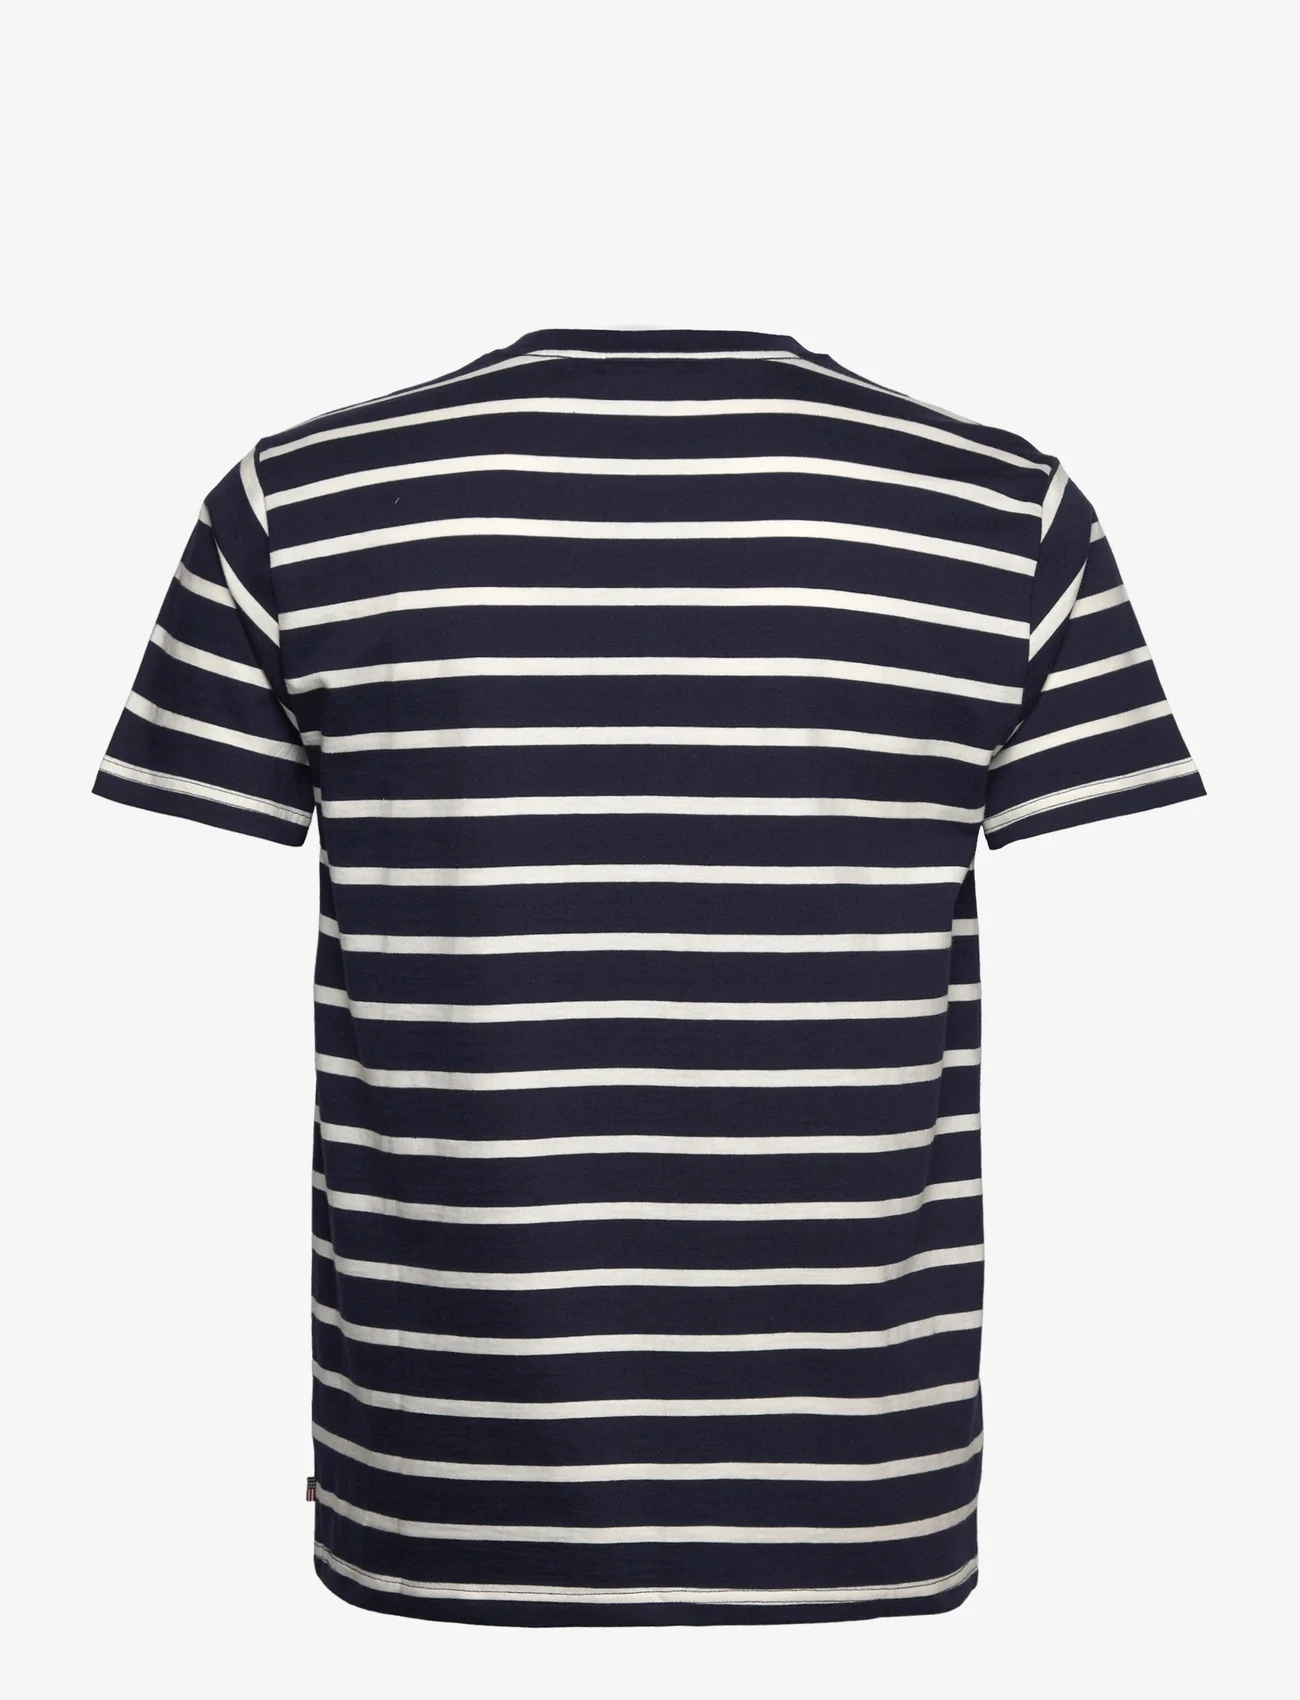 Lexington Clothing - Ricky Striped Tee - dark blue/beige stripe - 1